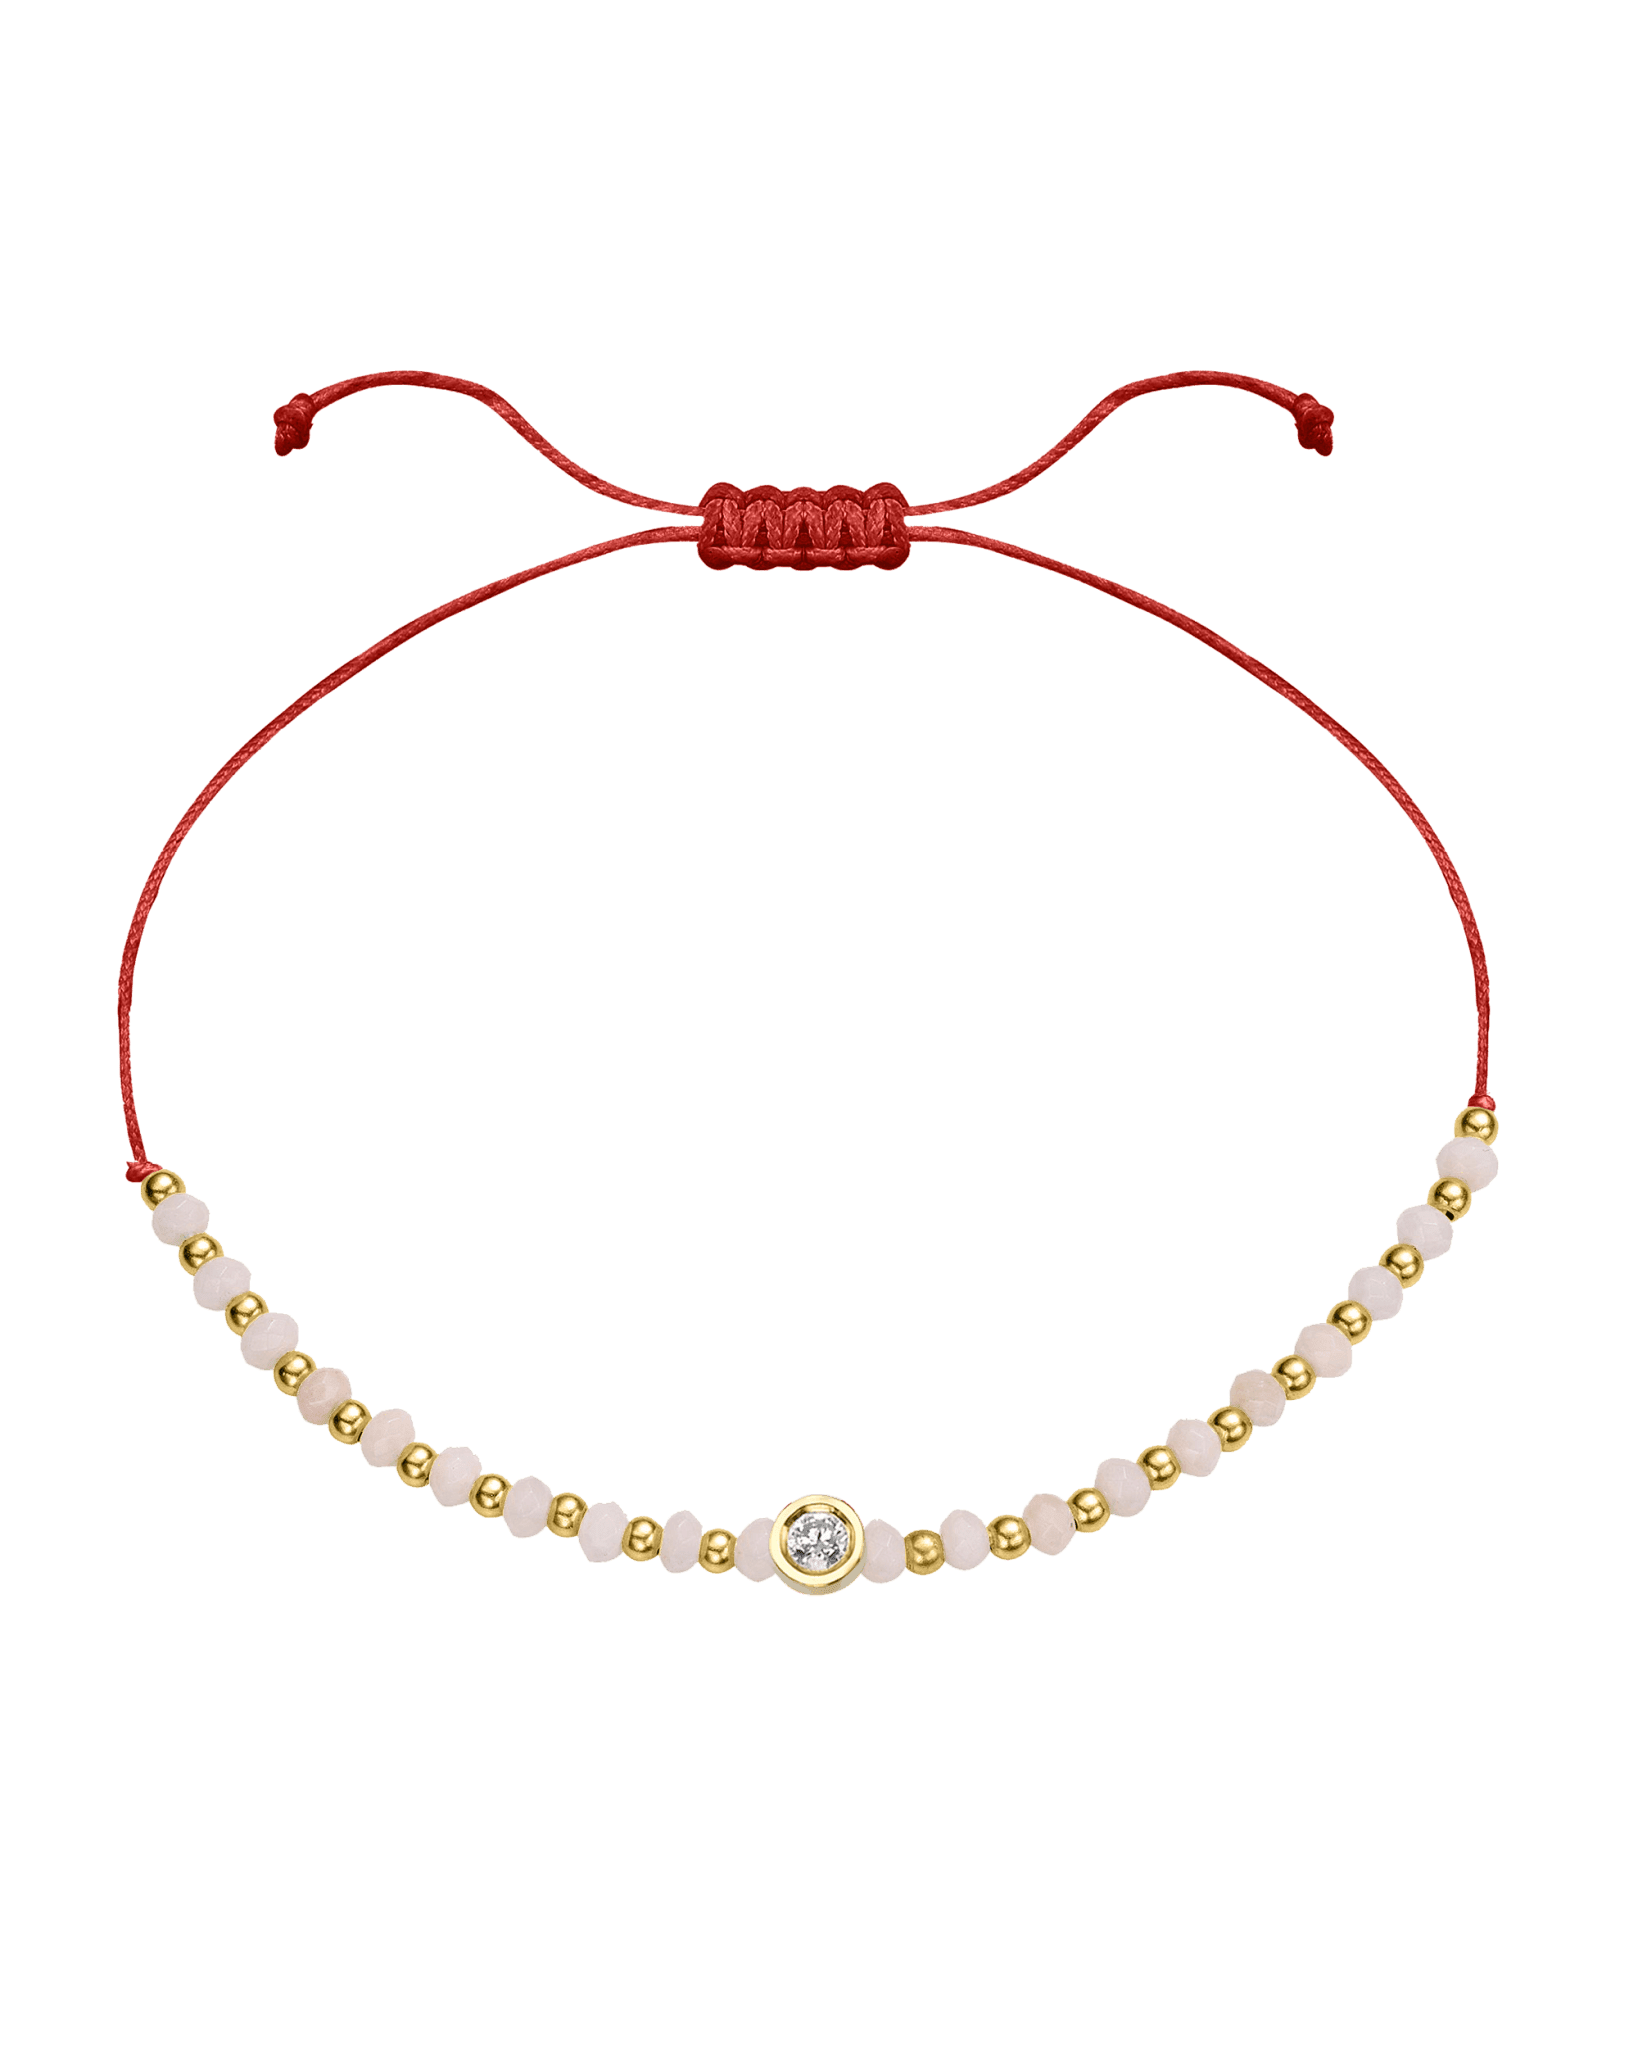 Rhodochrosite Gemstone String of Love Bracelet for Compassion - 14K Yellow Gold Bracelet 14K Solid Gold Red Medium: 0.04ct 